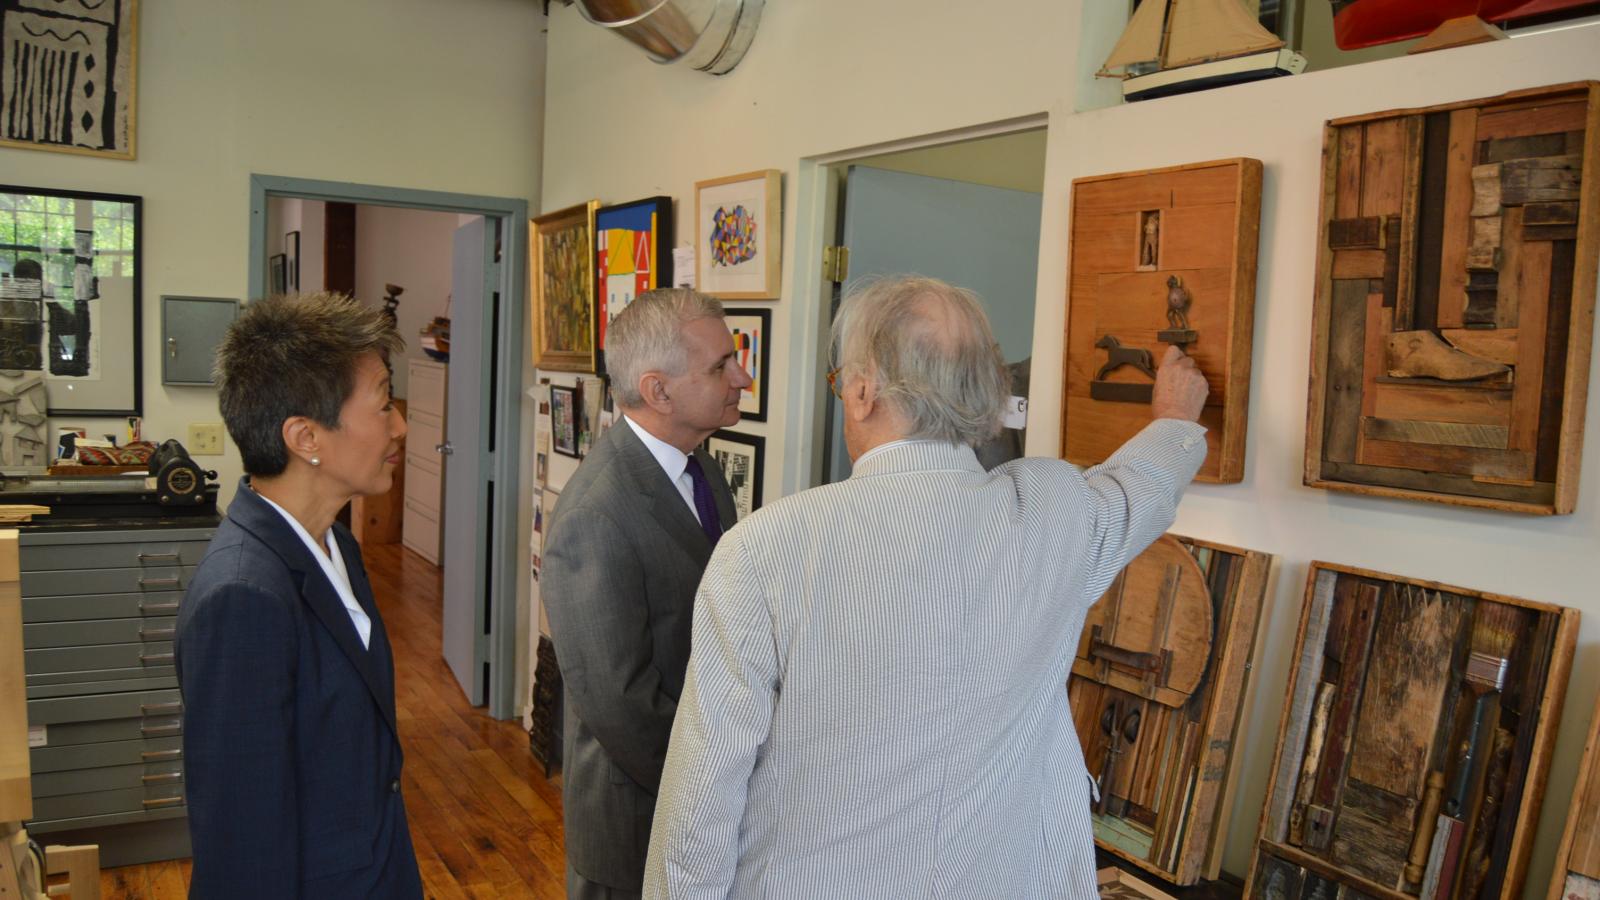 Senator Reed, NEA Chairman Jane Chu, and artist Morris Nathanson, who is showing his work.